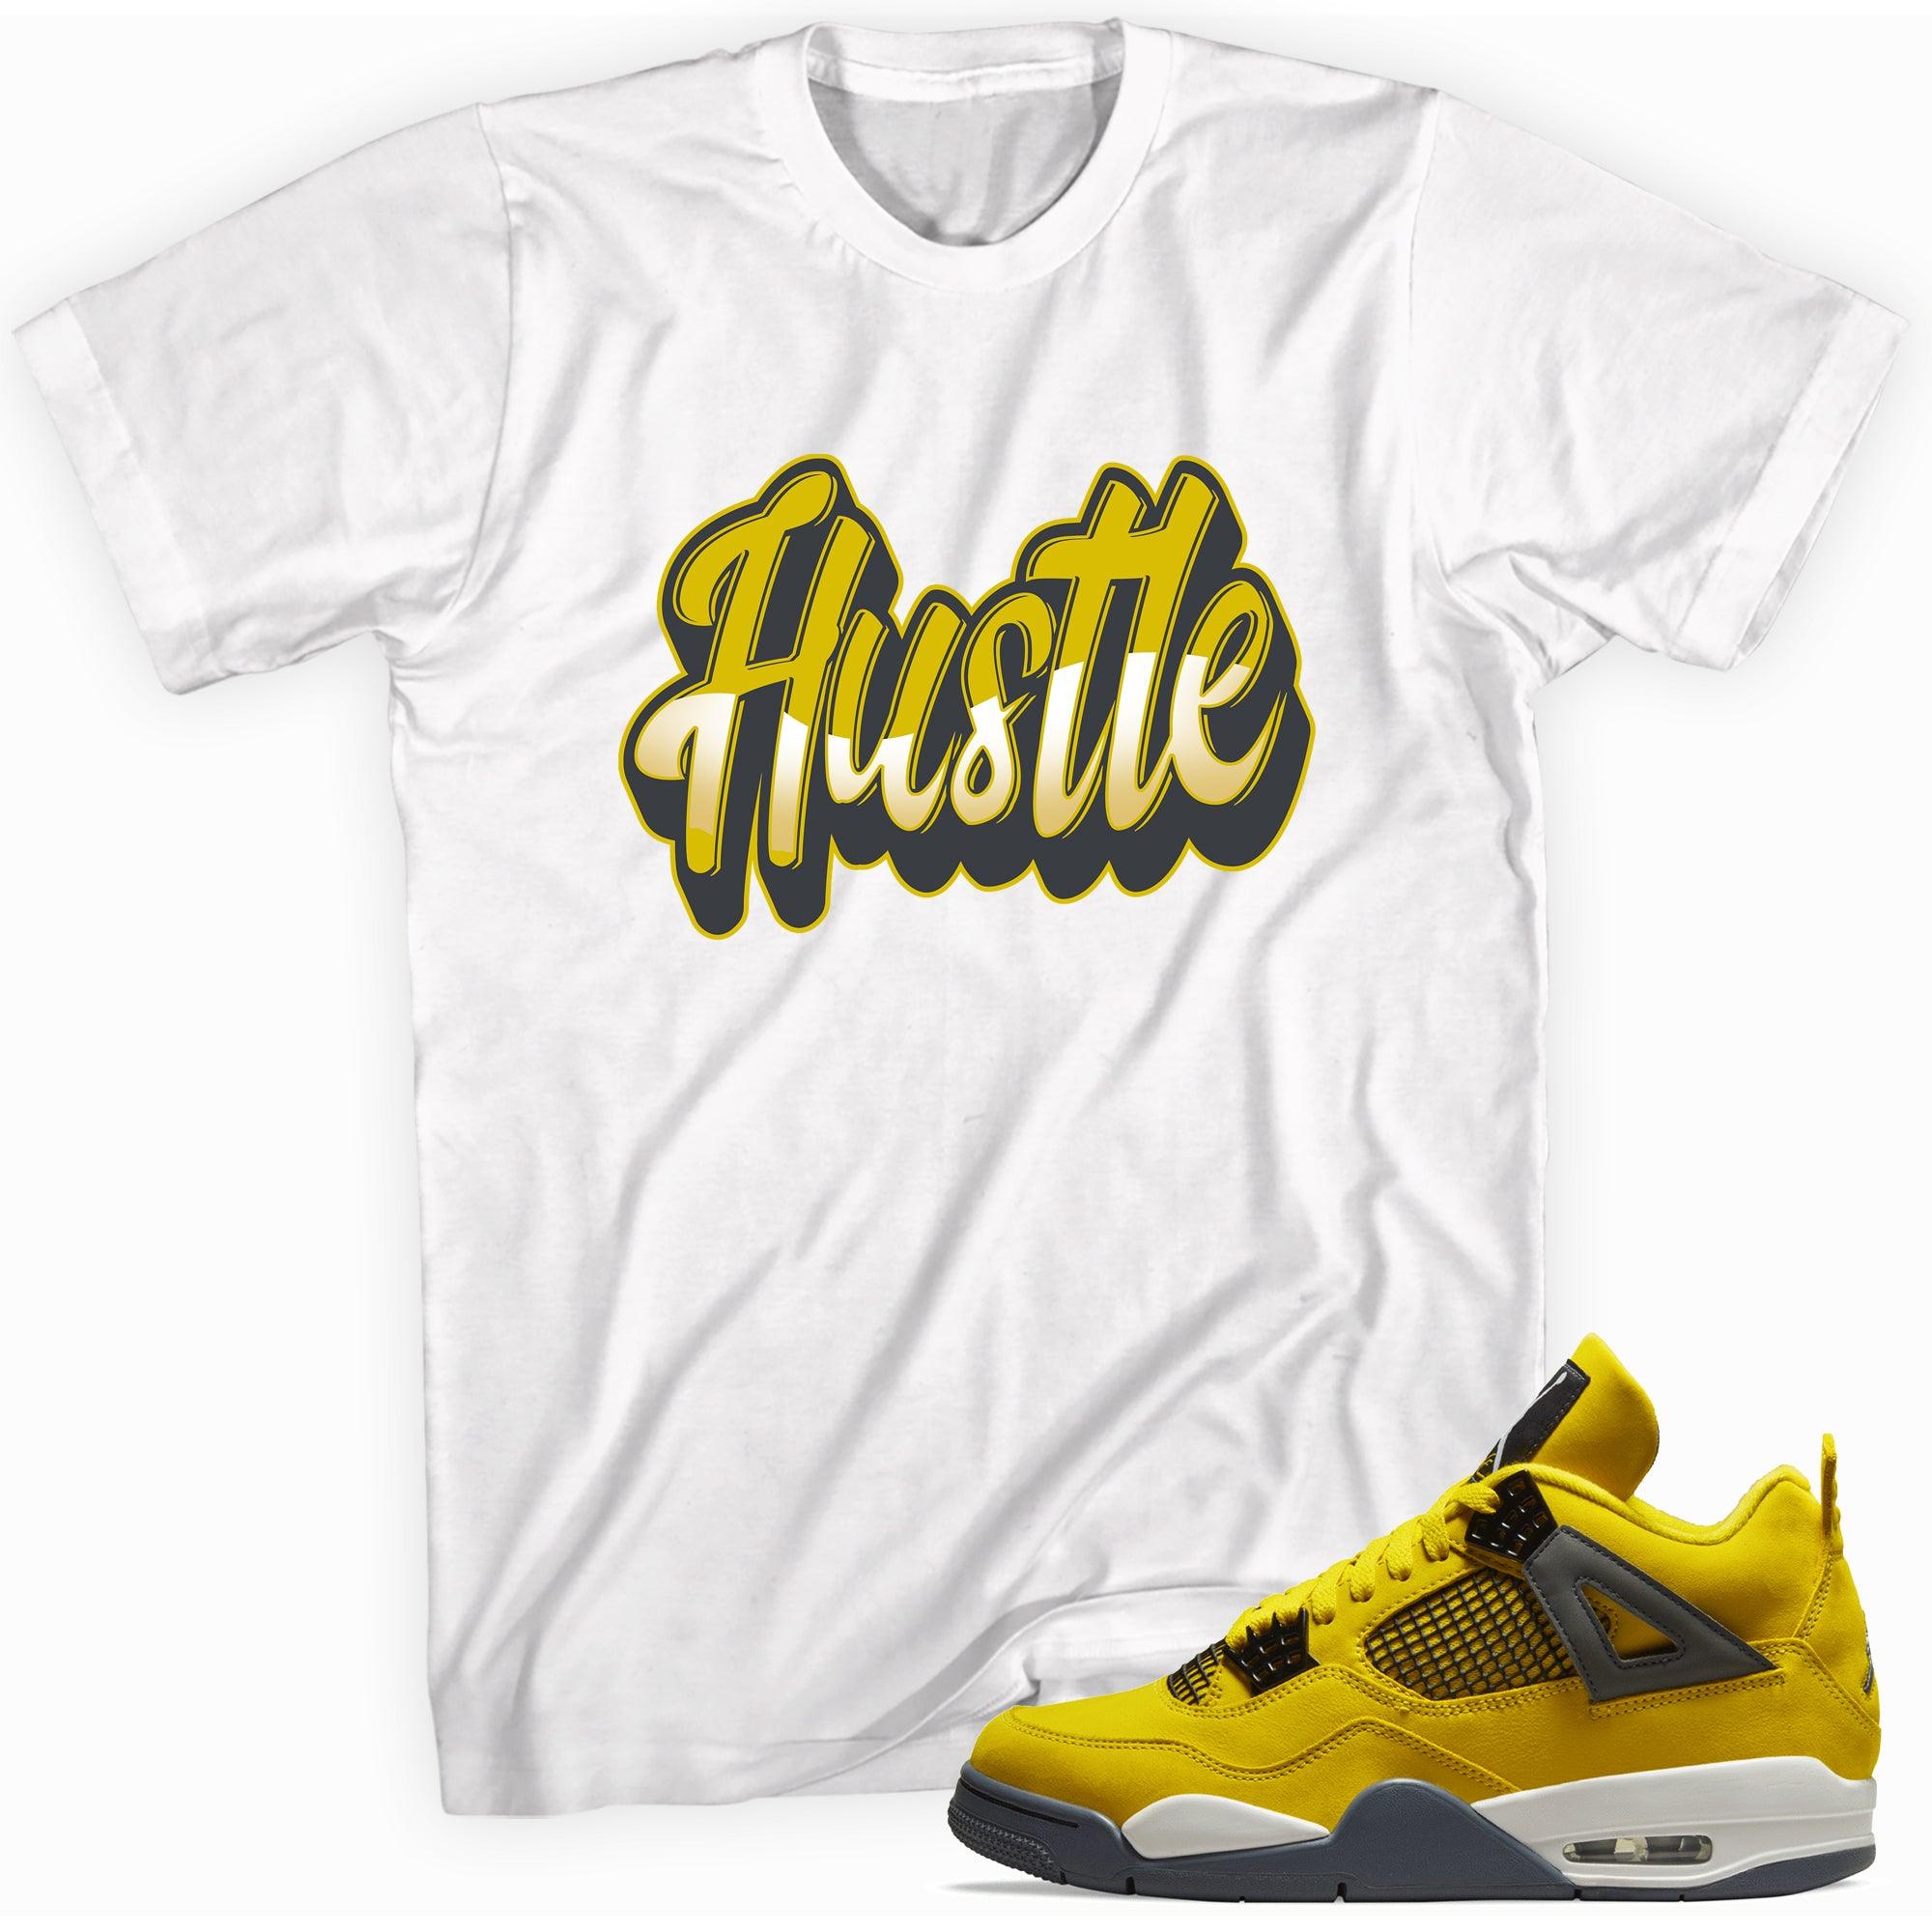 Hustle Shirt Jordan 4s Retro Lightning photo